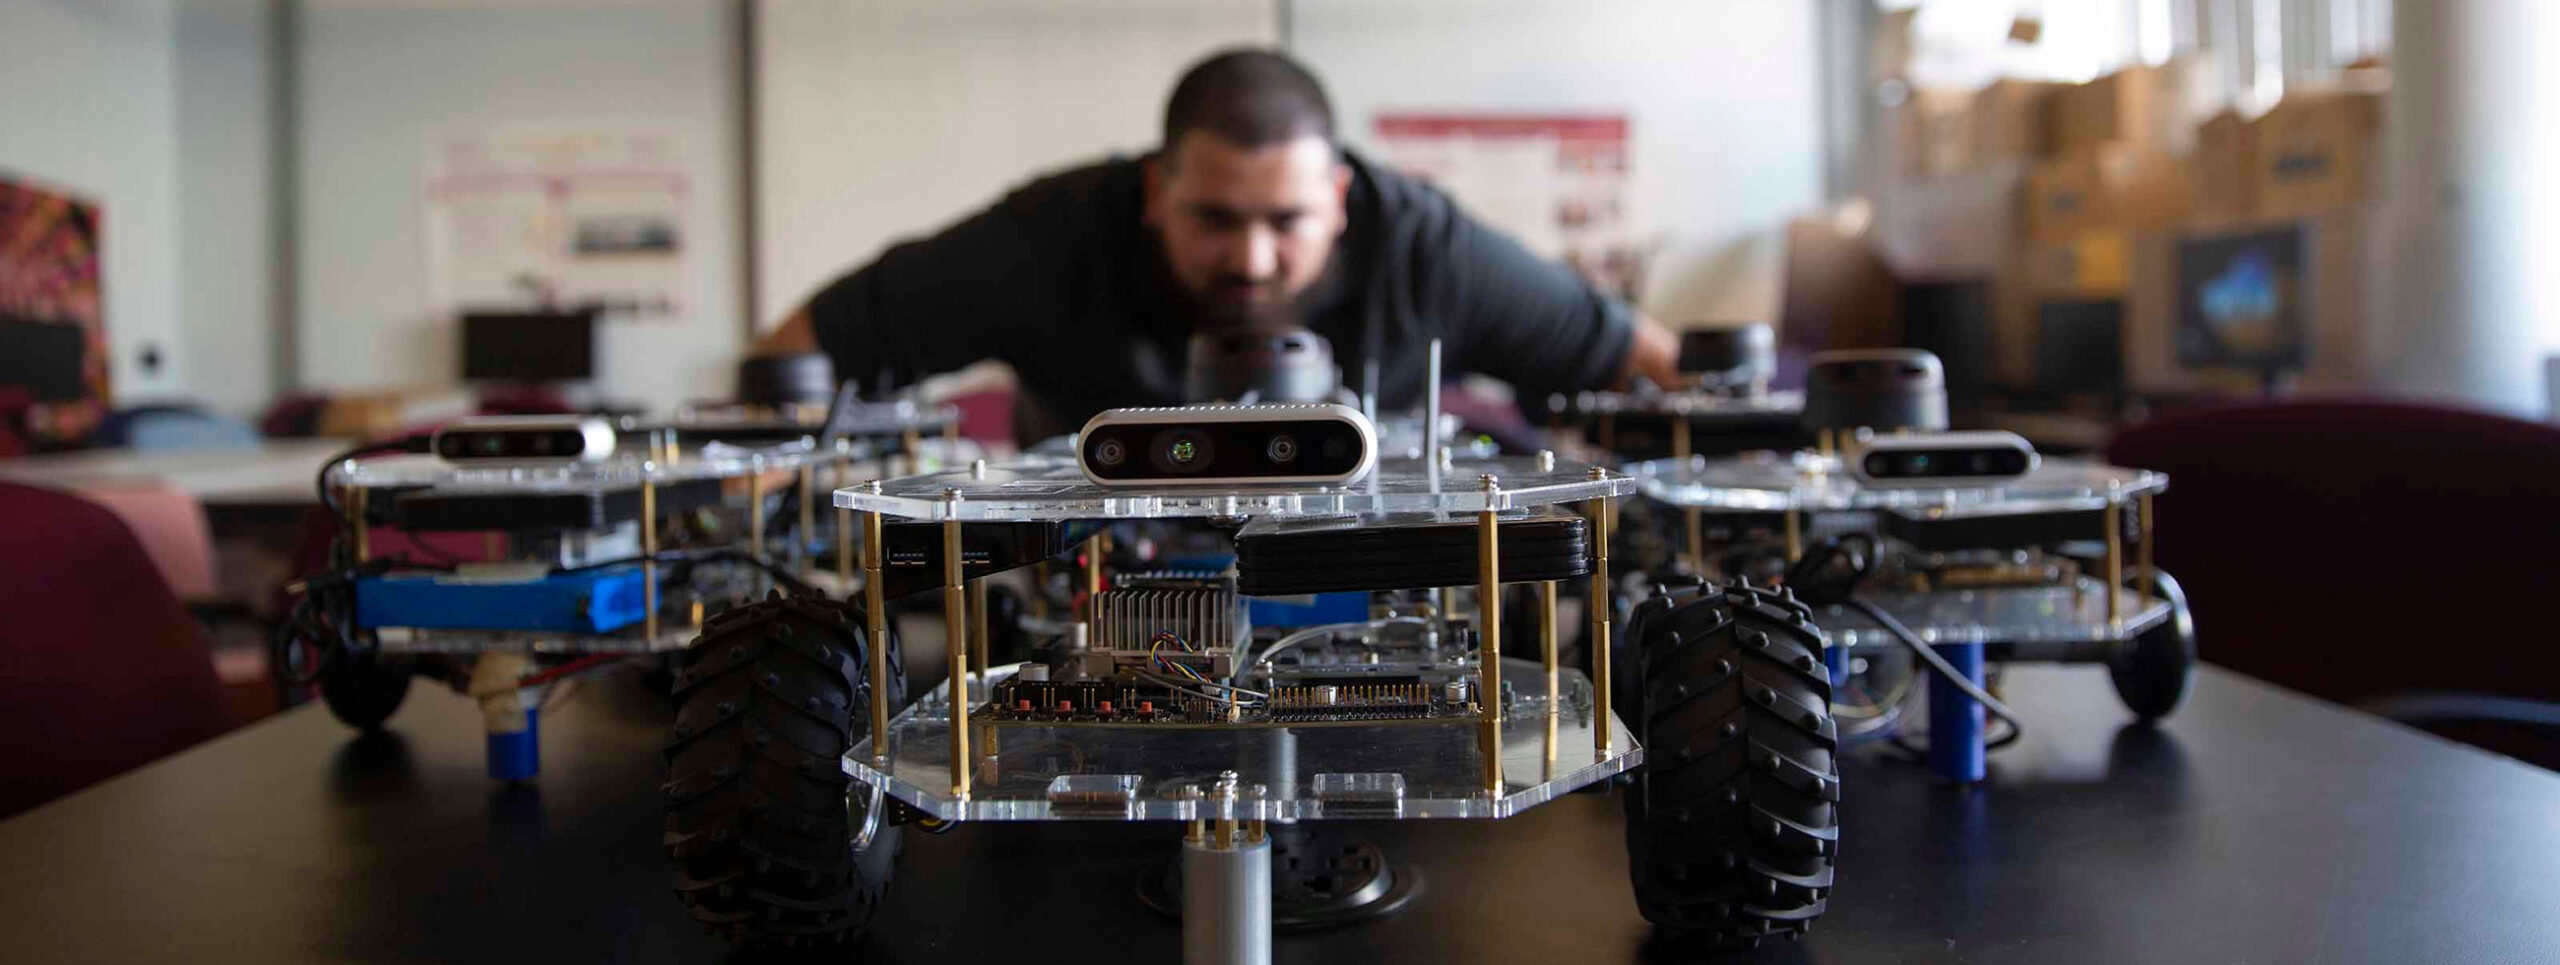 A student examines a wheeled robotics project